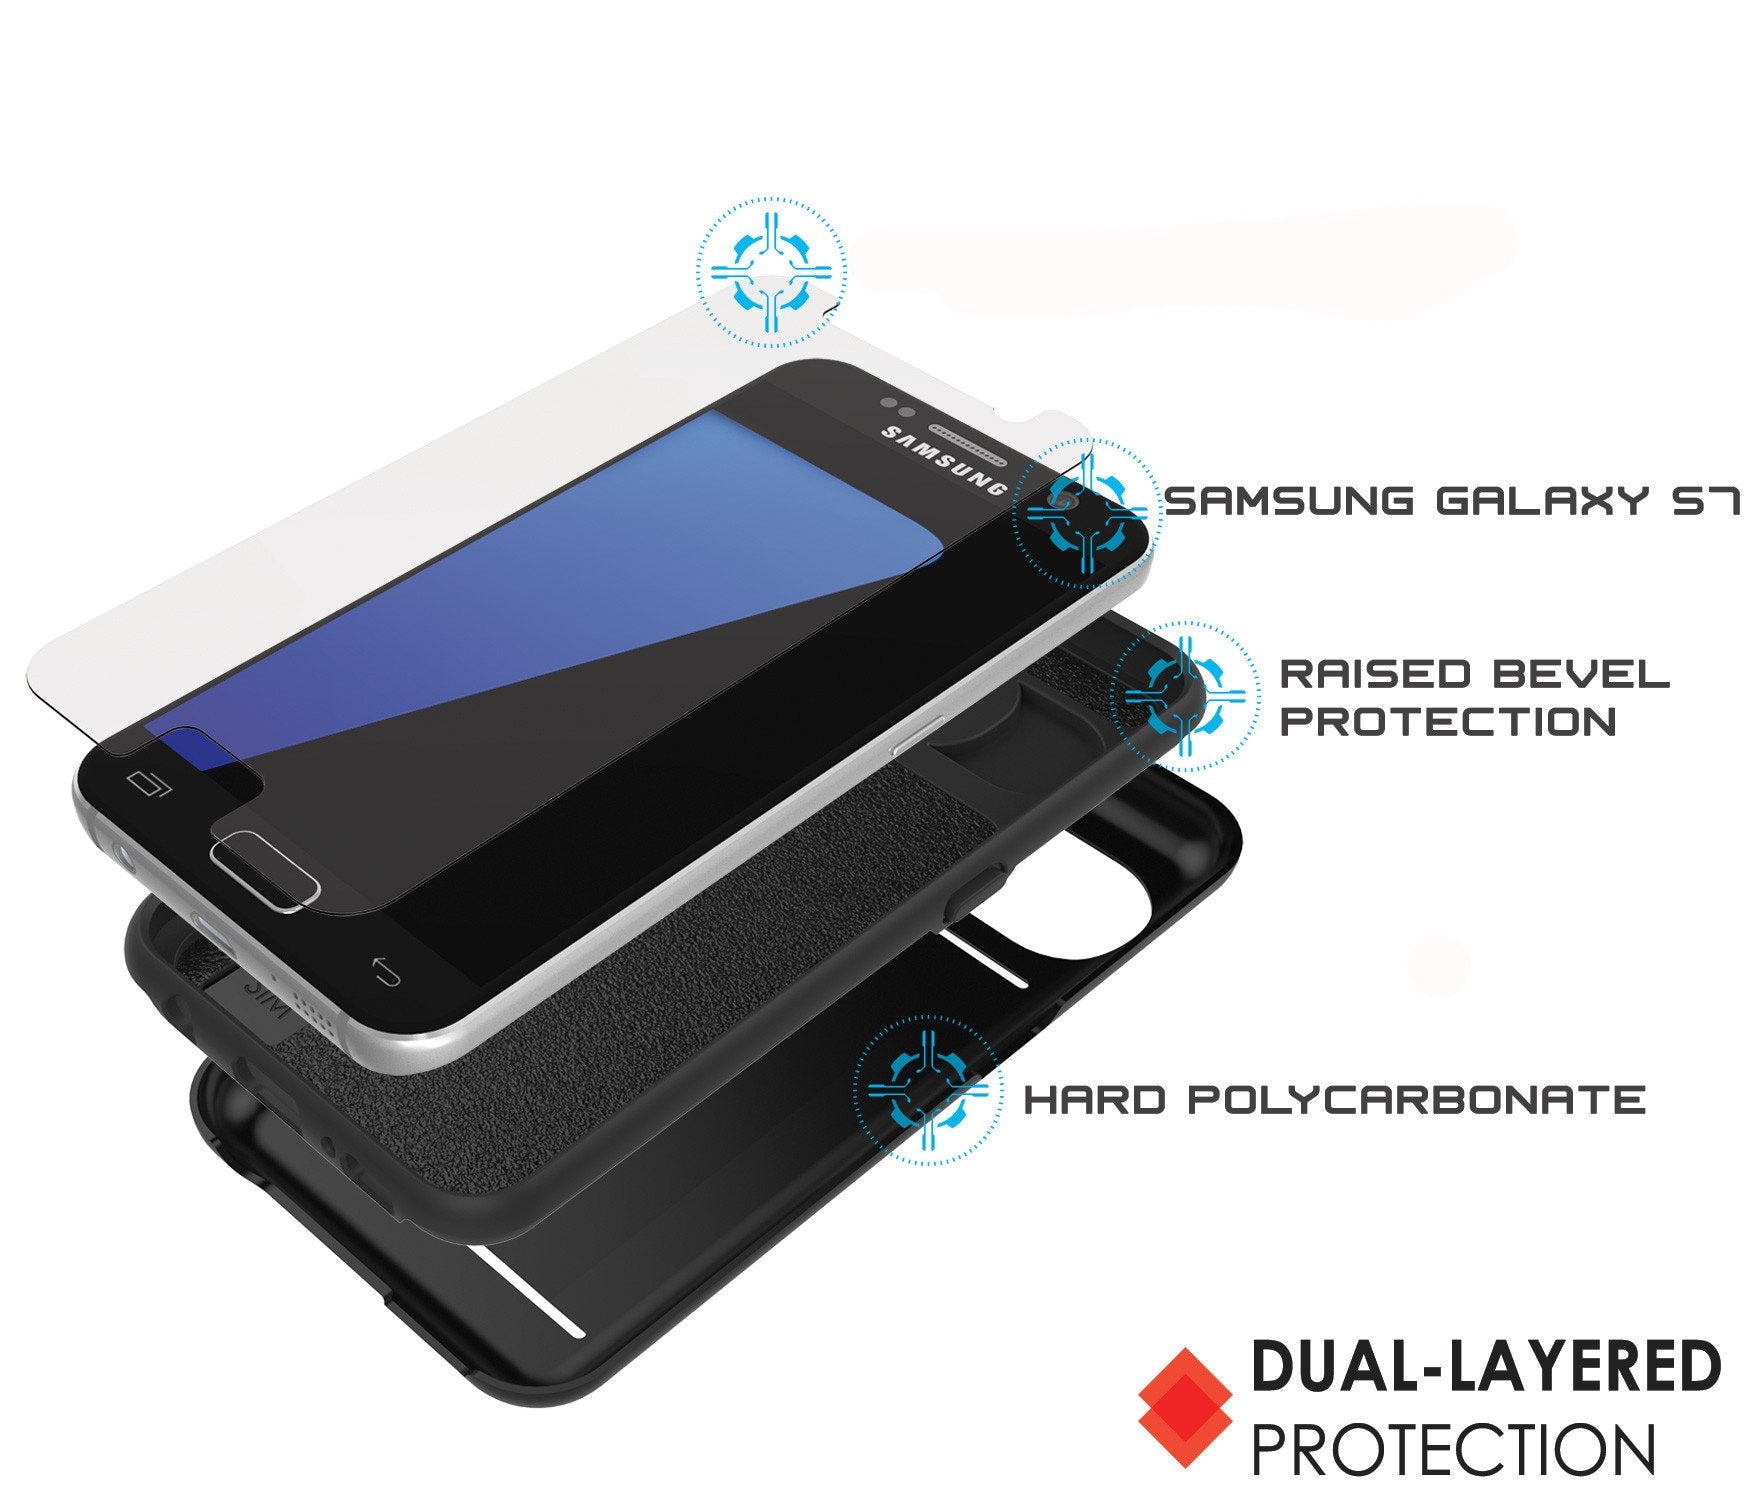 Galaxy S7 EDGE Case PunkCase CLUTCH Black Series Slim Armor Soft Cover Case w/ Screen Protector